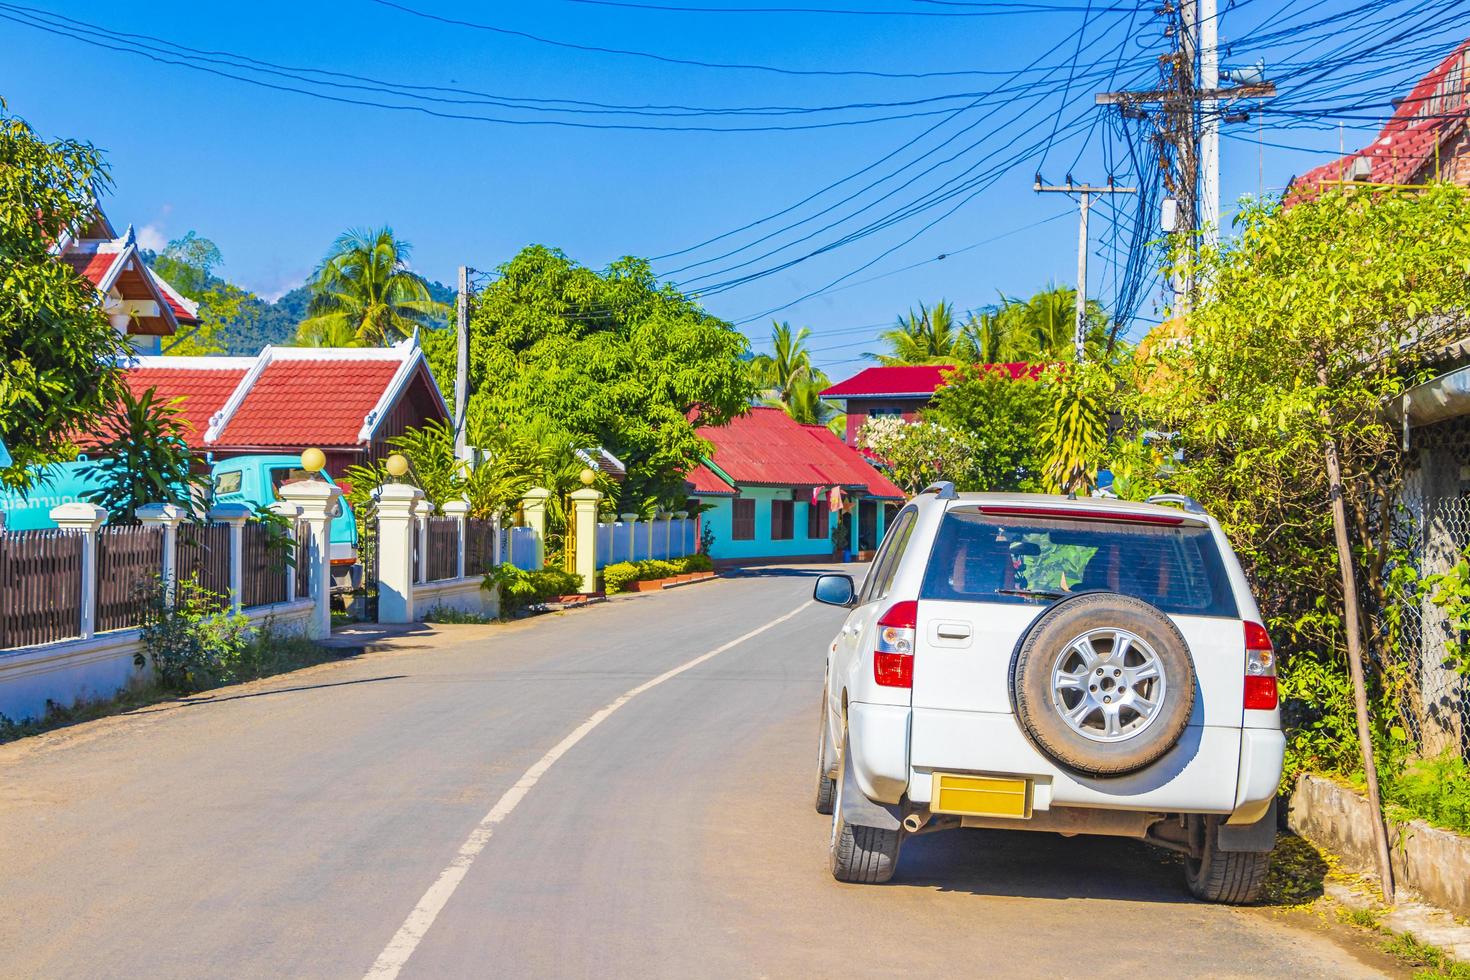 luang prabang, laos 2018- tipiche strade colorate della città luang prabang laos foto